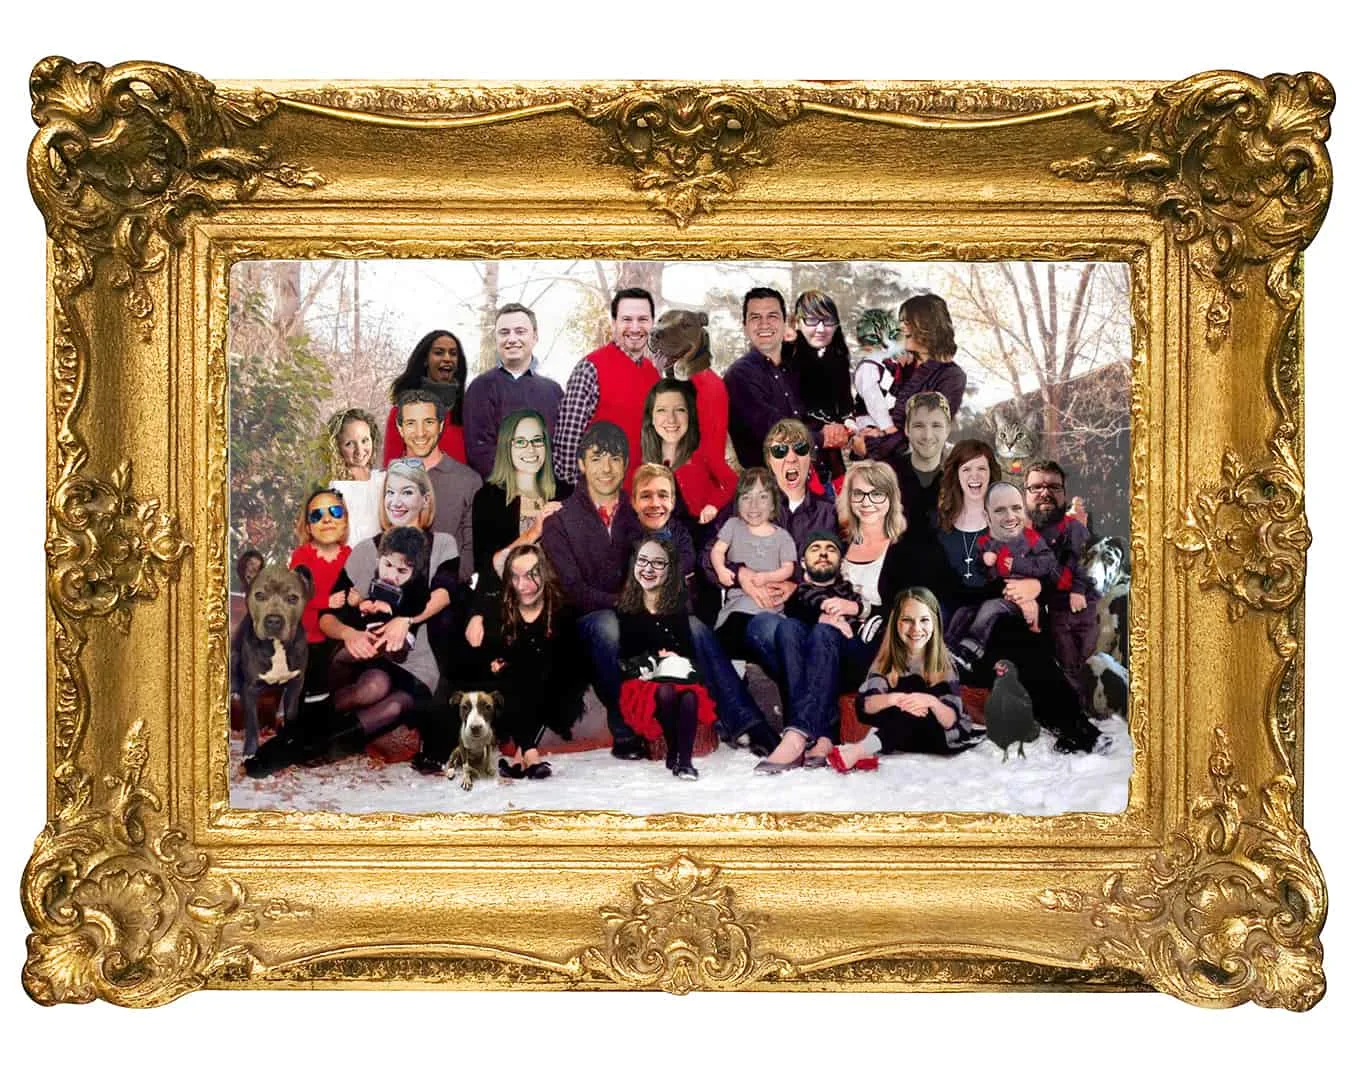 A photoshop of Mediavine team members' faces over a family Christmas photo.